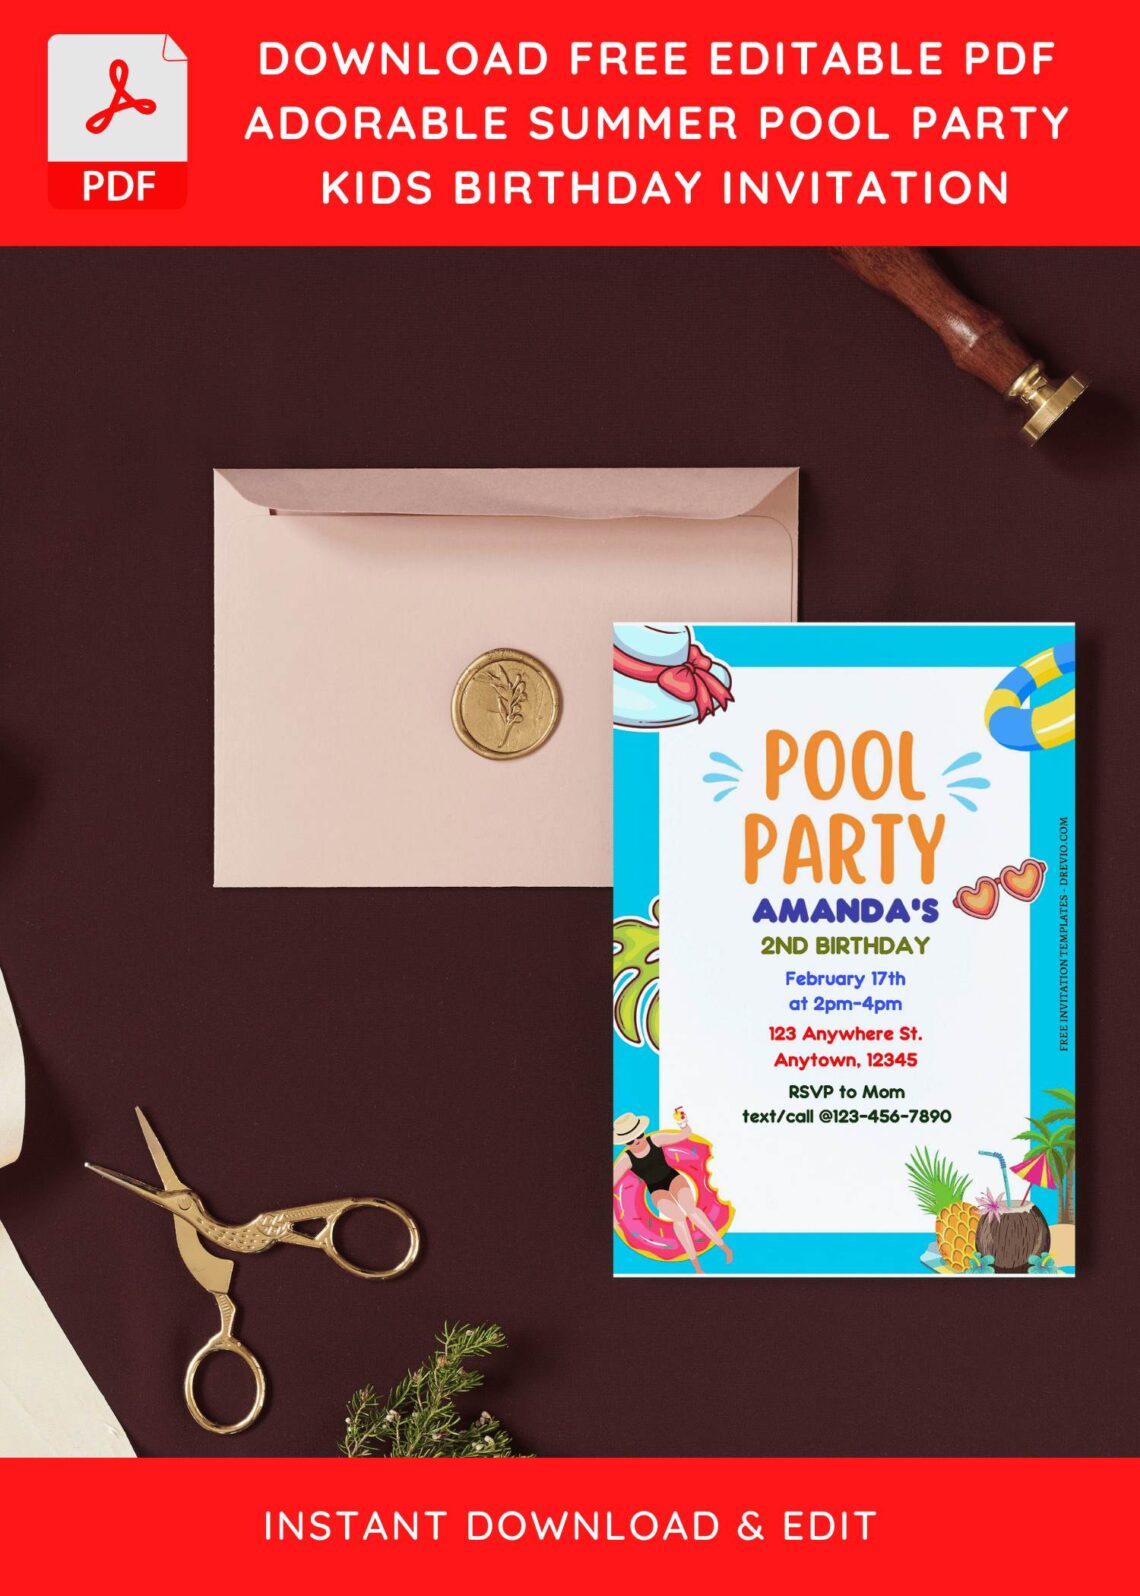 (Free Editable PDF) Adorable Summer Pool Kids Birthday Party Invitation Templates I